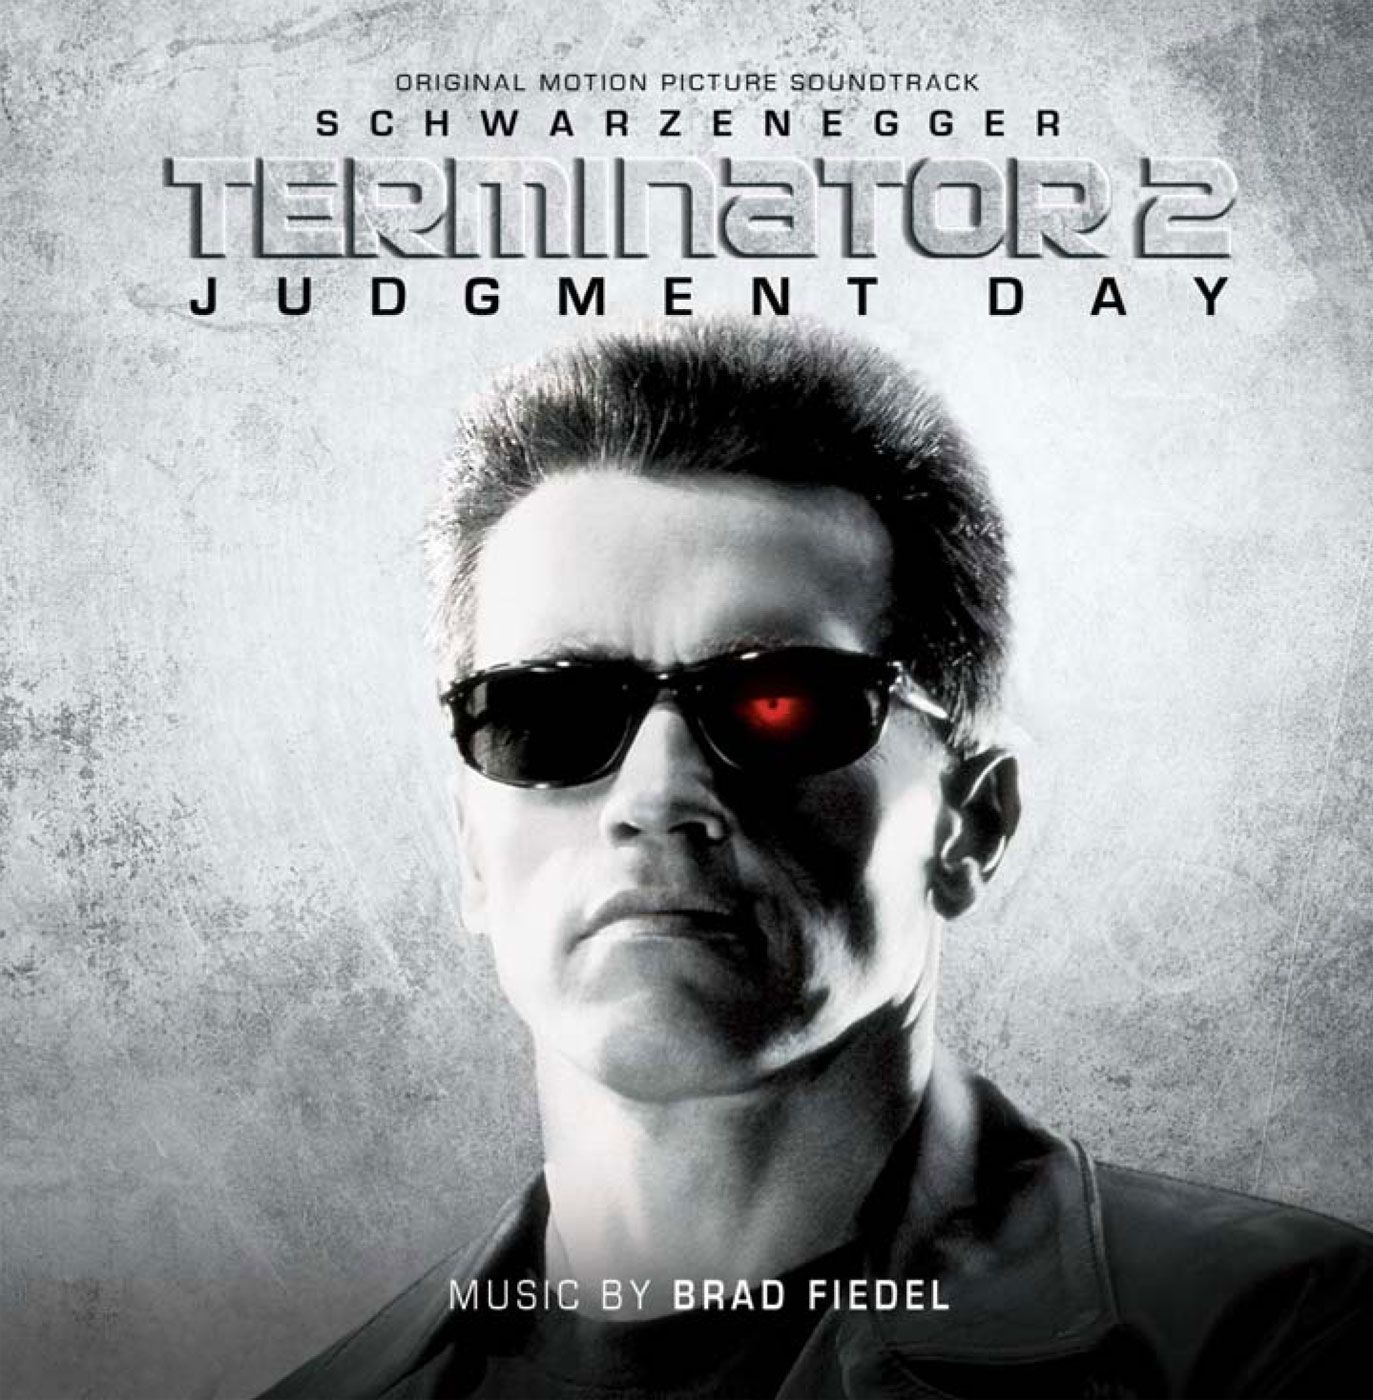 Terminator 2: Judgment Day wallpaper, Movie, HQ Terminator 2: Judgment Day pictureK Wallpaper 2019